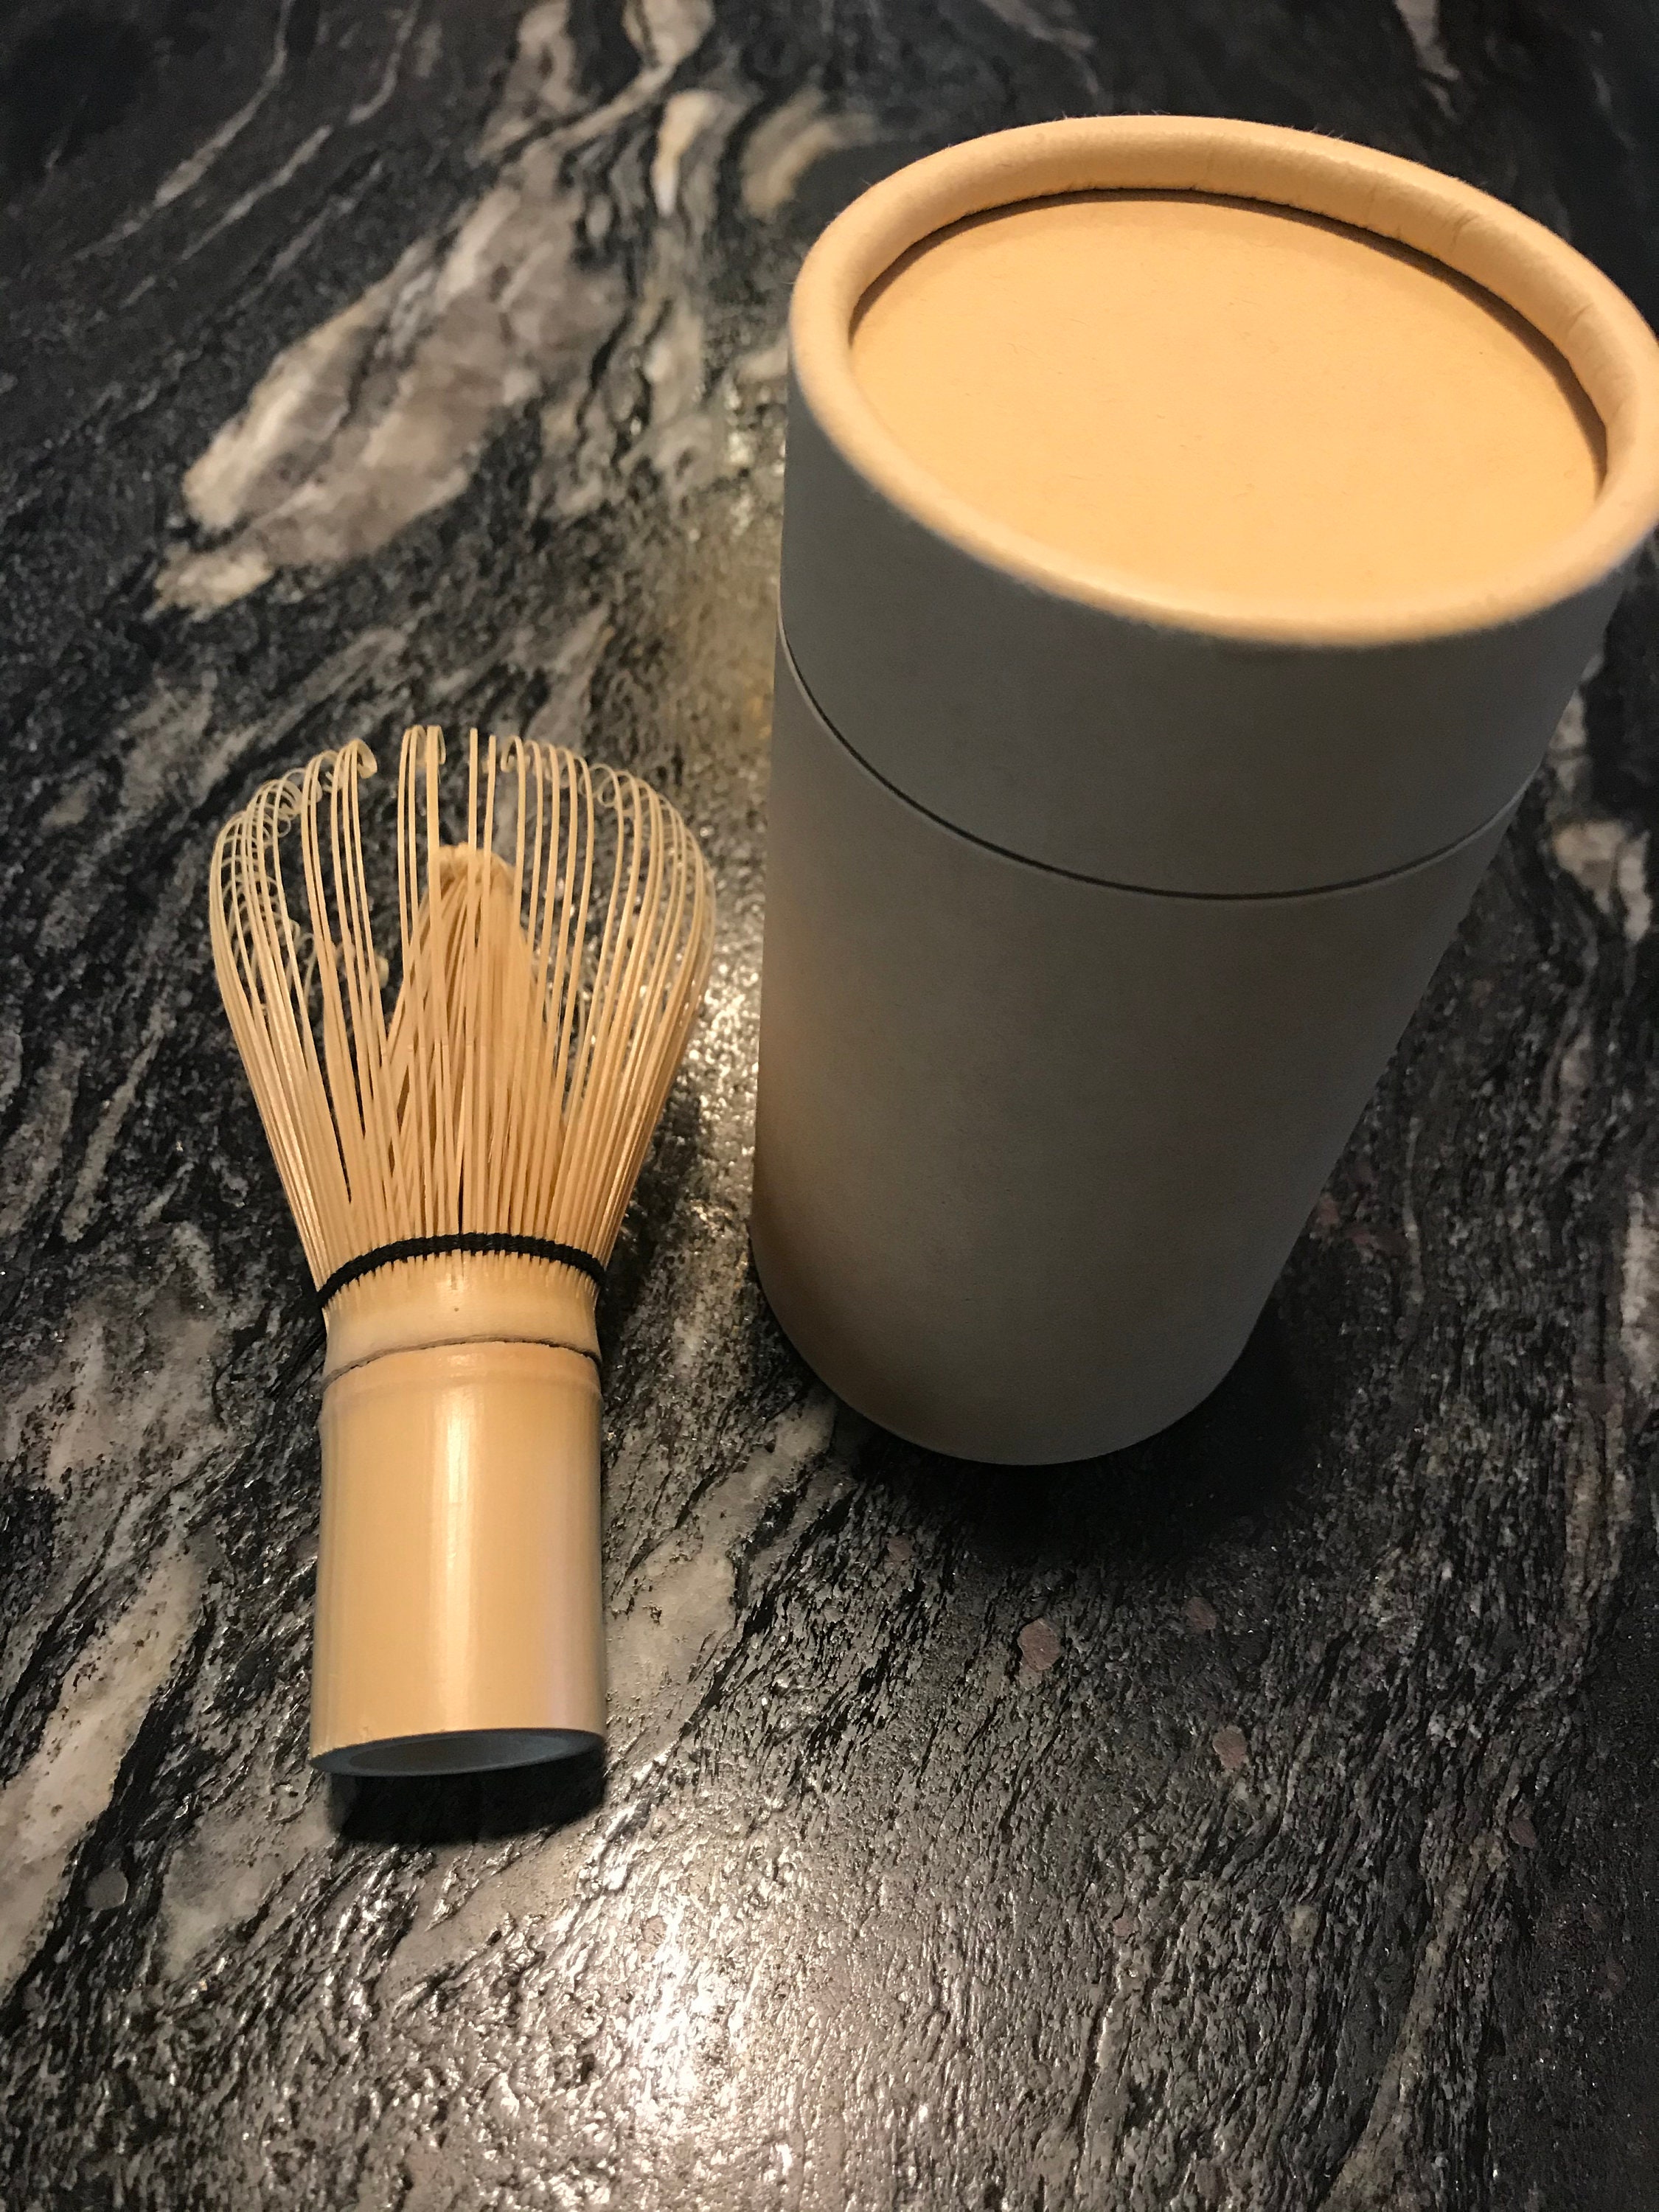 Matcha Whisk Set - Batidor matcha, cuchara tradicional, cuchara de té.  Hecho a mano a partir de bambú natural